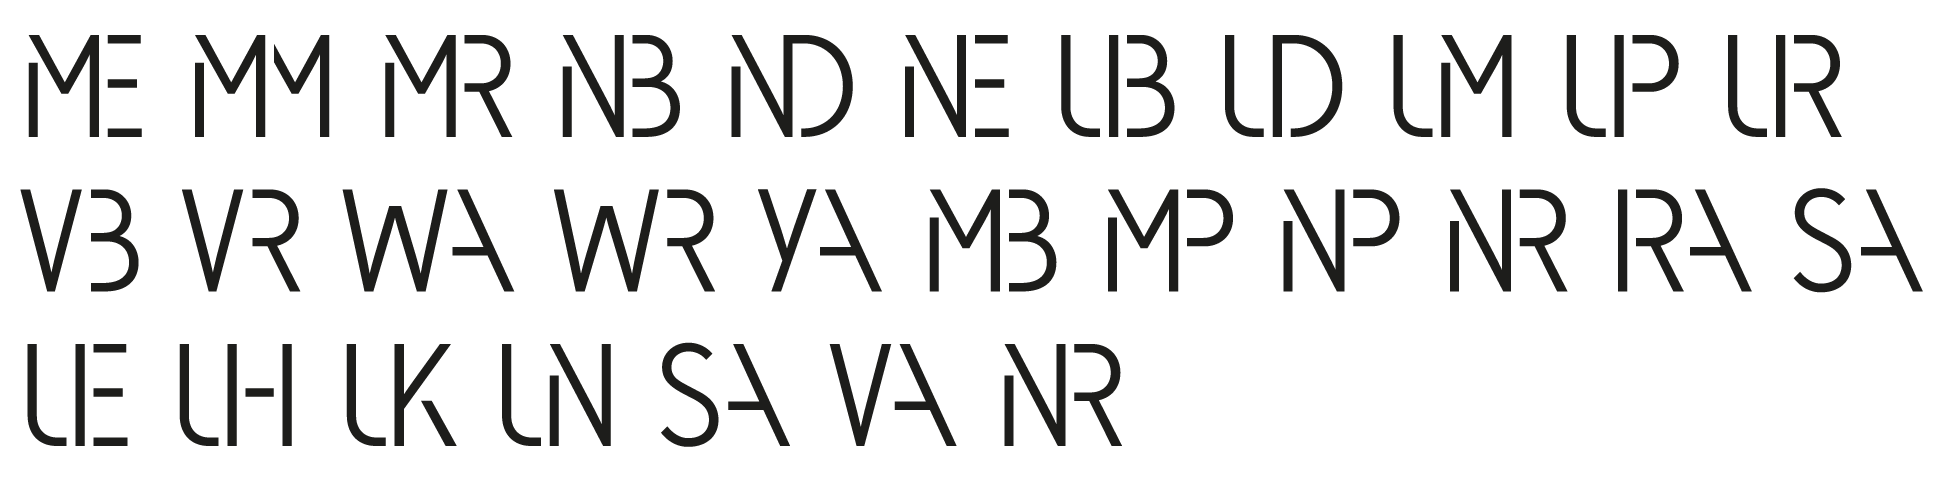 ligatures-typographiques-Fontevraud